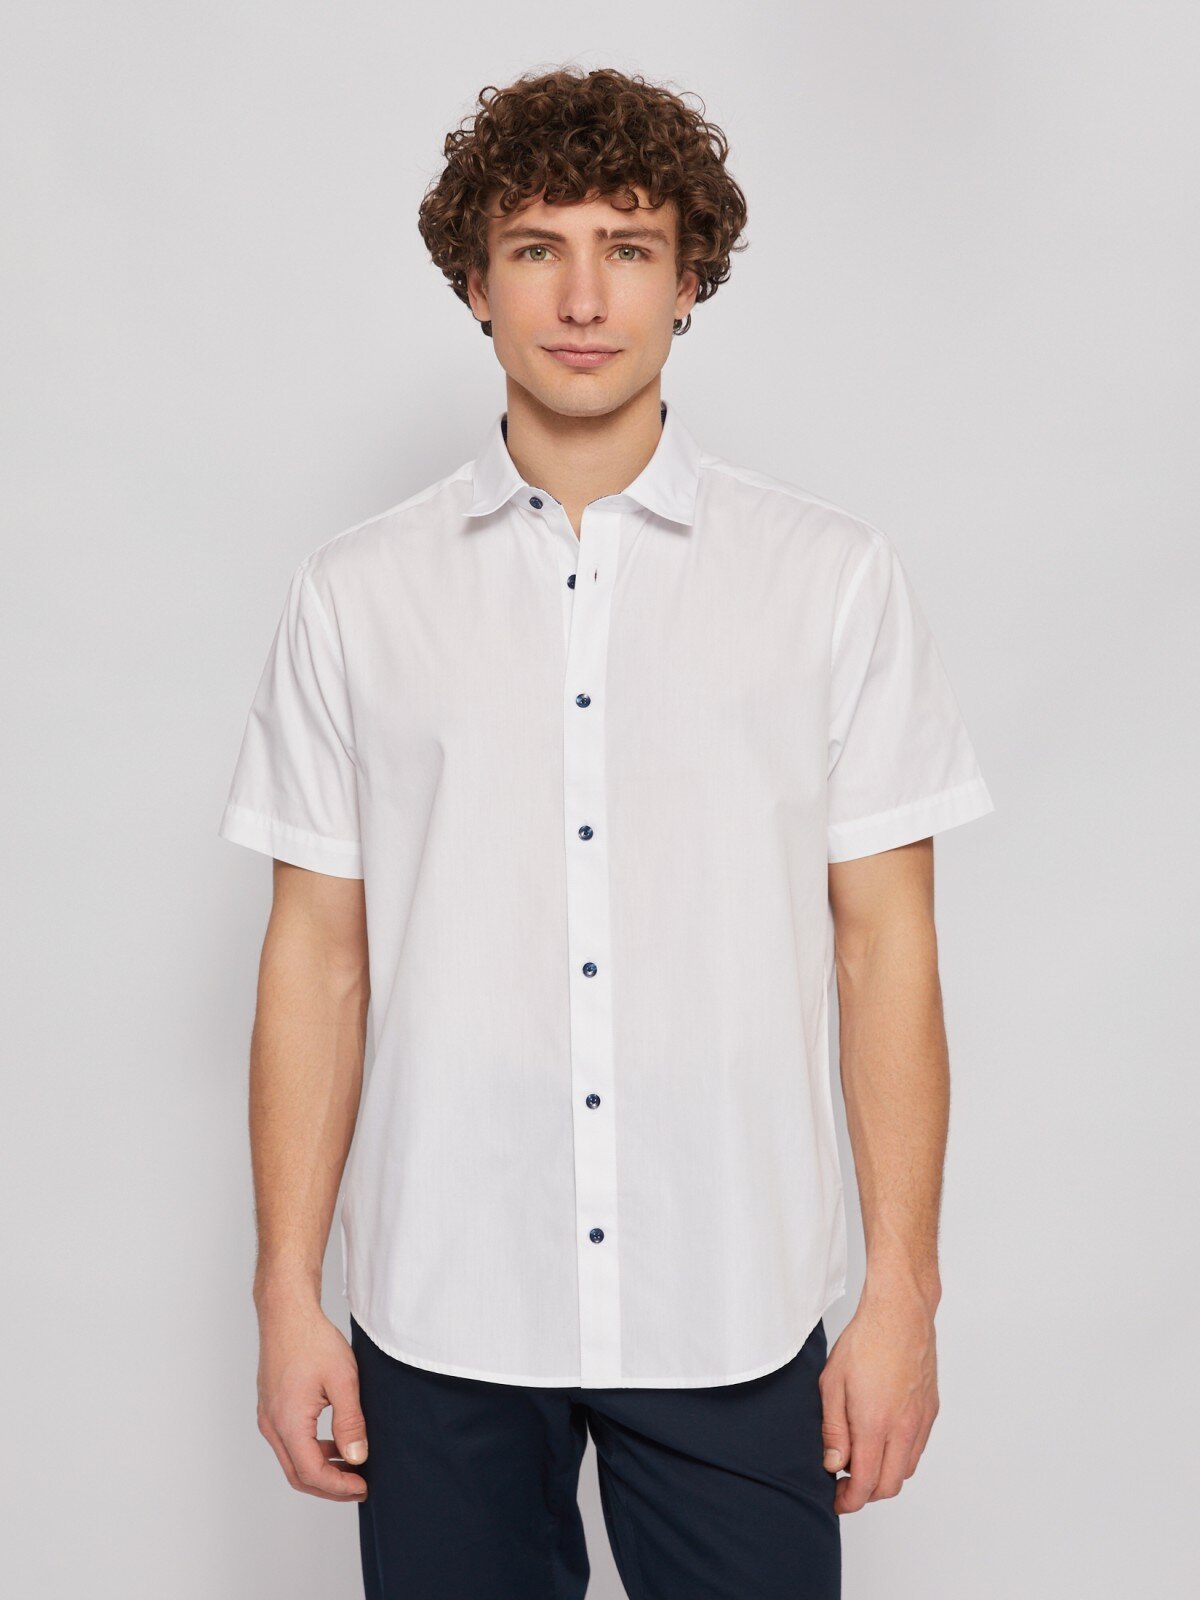 Офисная рубашка с коротким рукавом цвет Белый размер S 014222259012